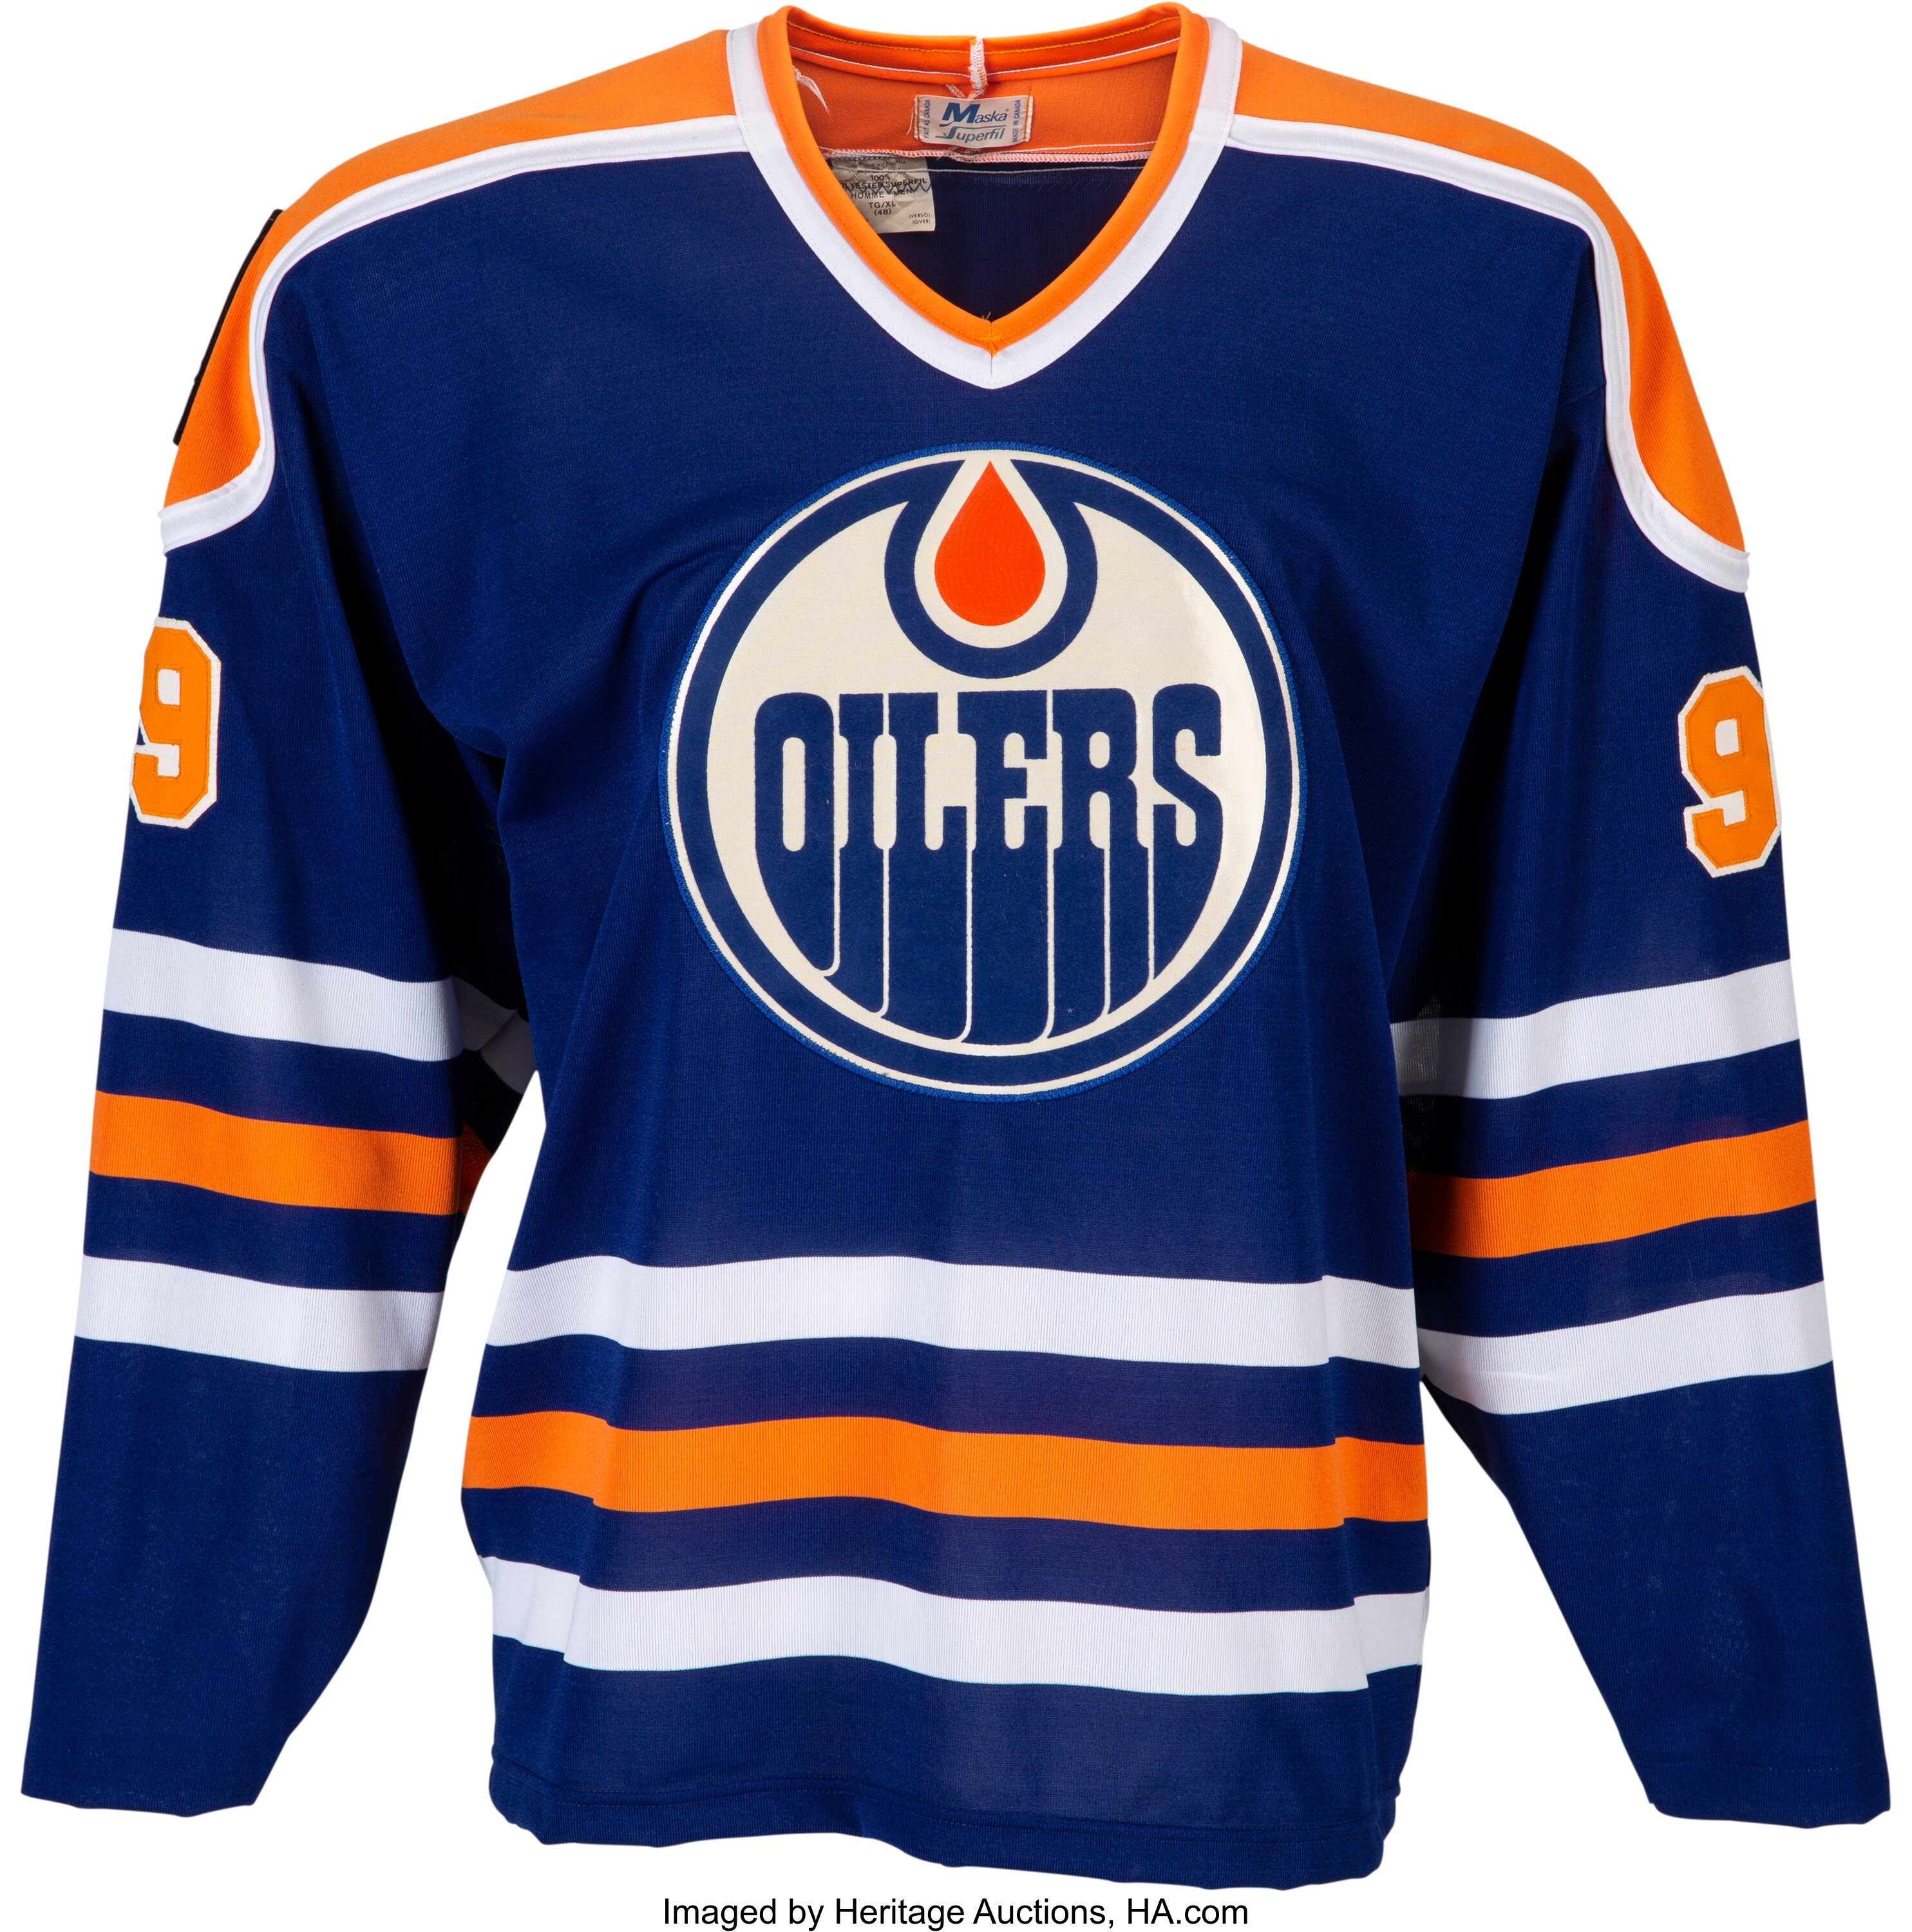 Wayne Gretzky Edmonton Oilers NHL Original Autographed Jerseys for